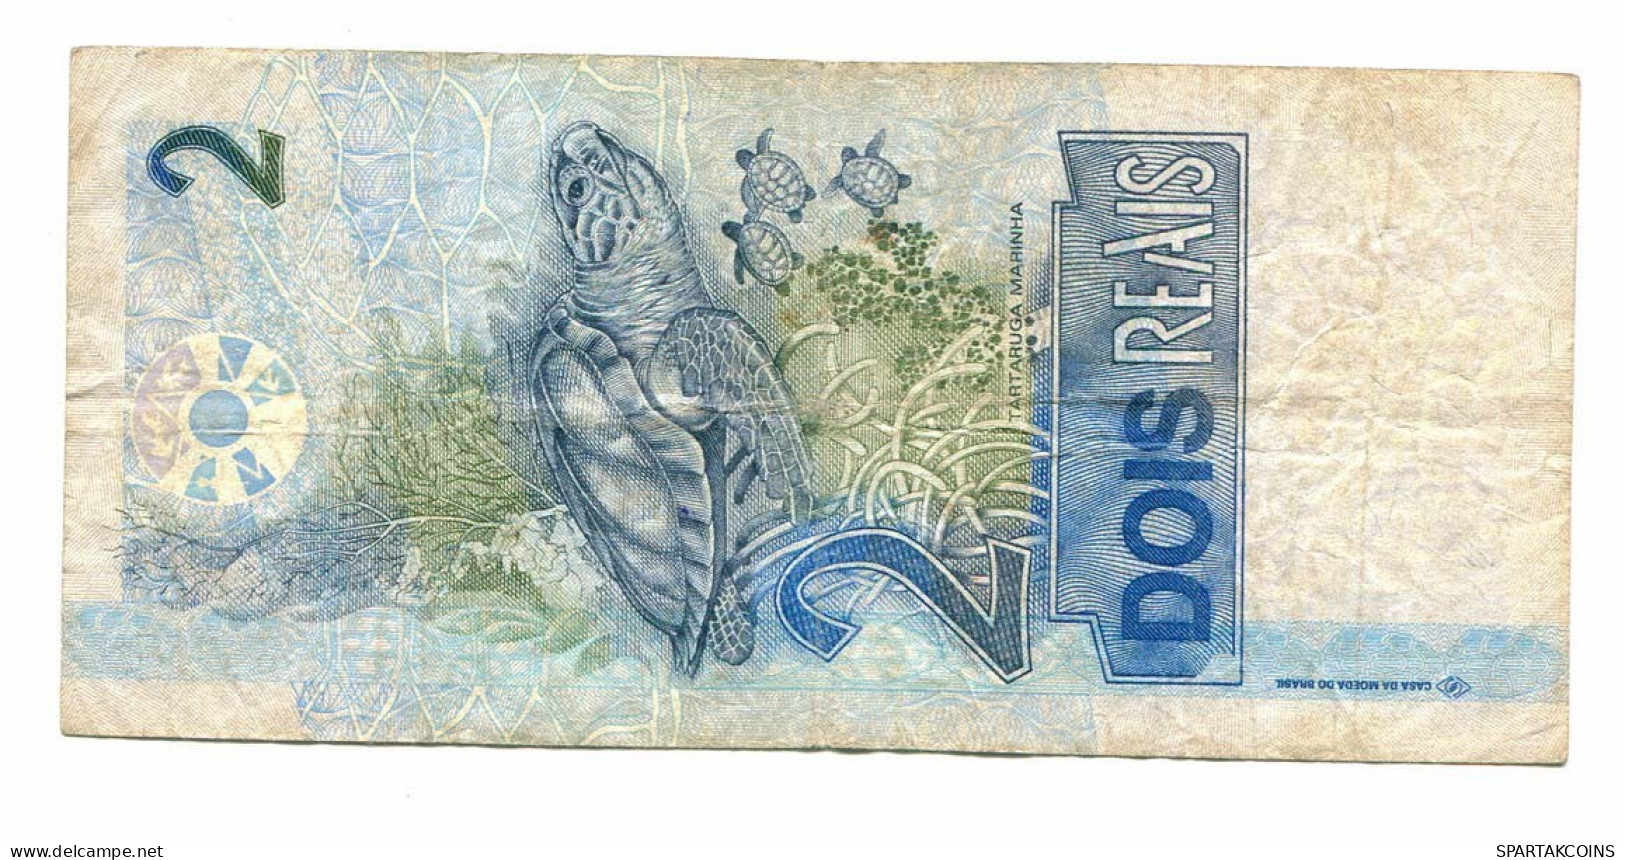 BRASIL 2 REAIS 2001 Tartaruga Paper Money Banknote #P10829.4 - [11] Emisiones Locales